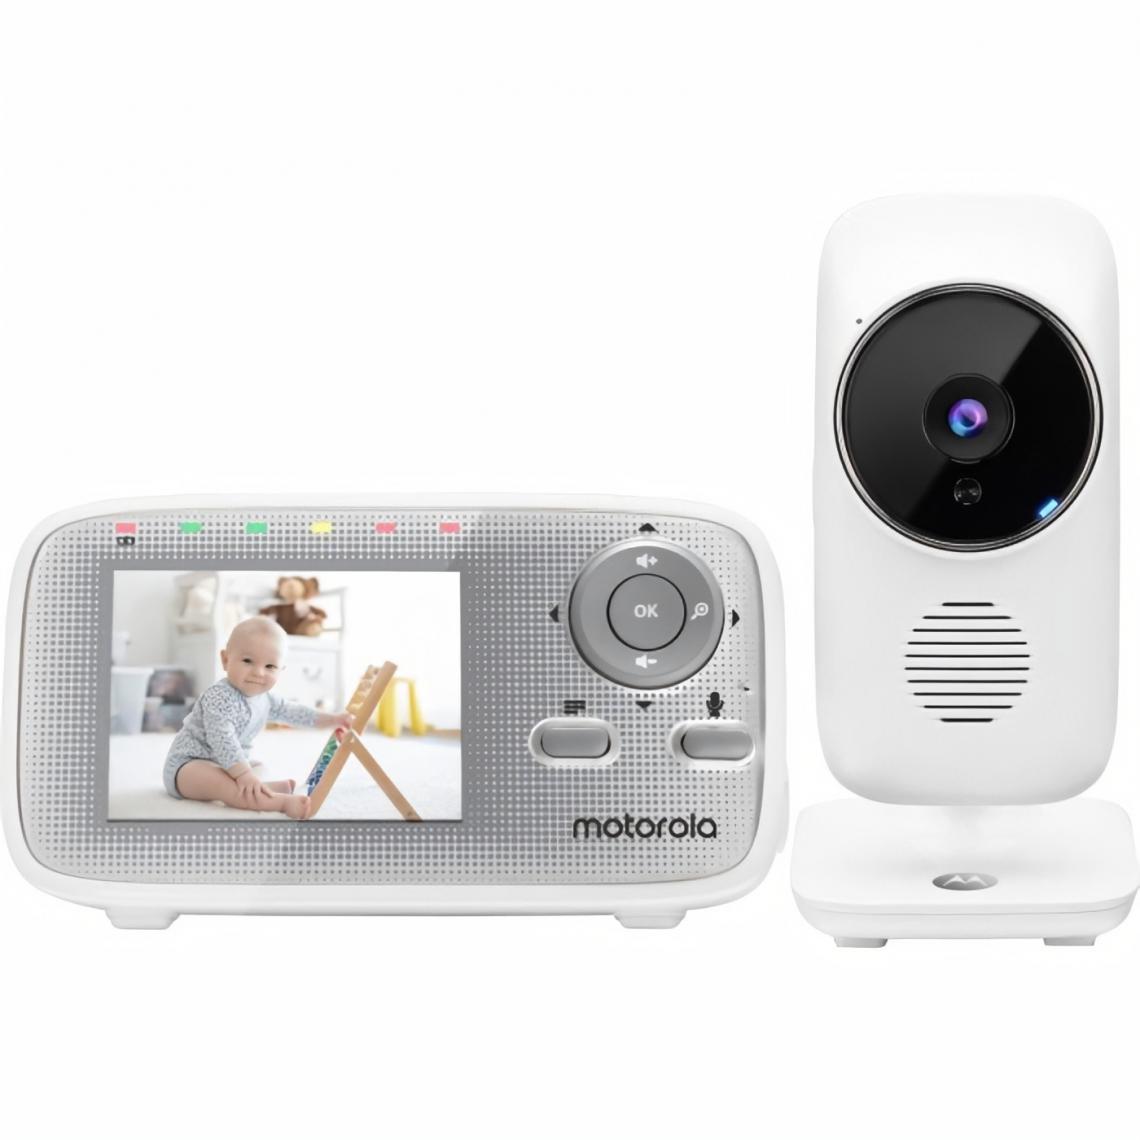 Motorola - MOTOROLA BABY Mbp 481 XL video ecran 2,4 , vision nuit , Zoom x2 , temperature chambre - Babyphone connecté